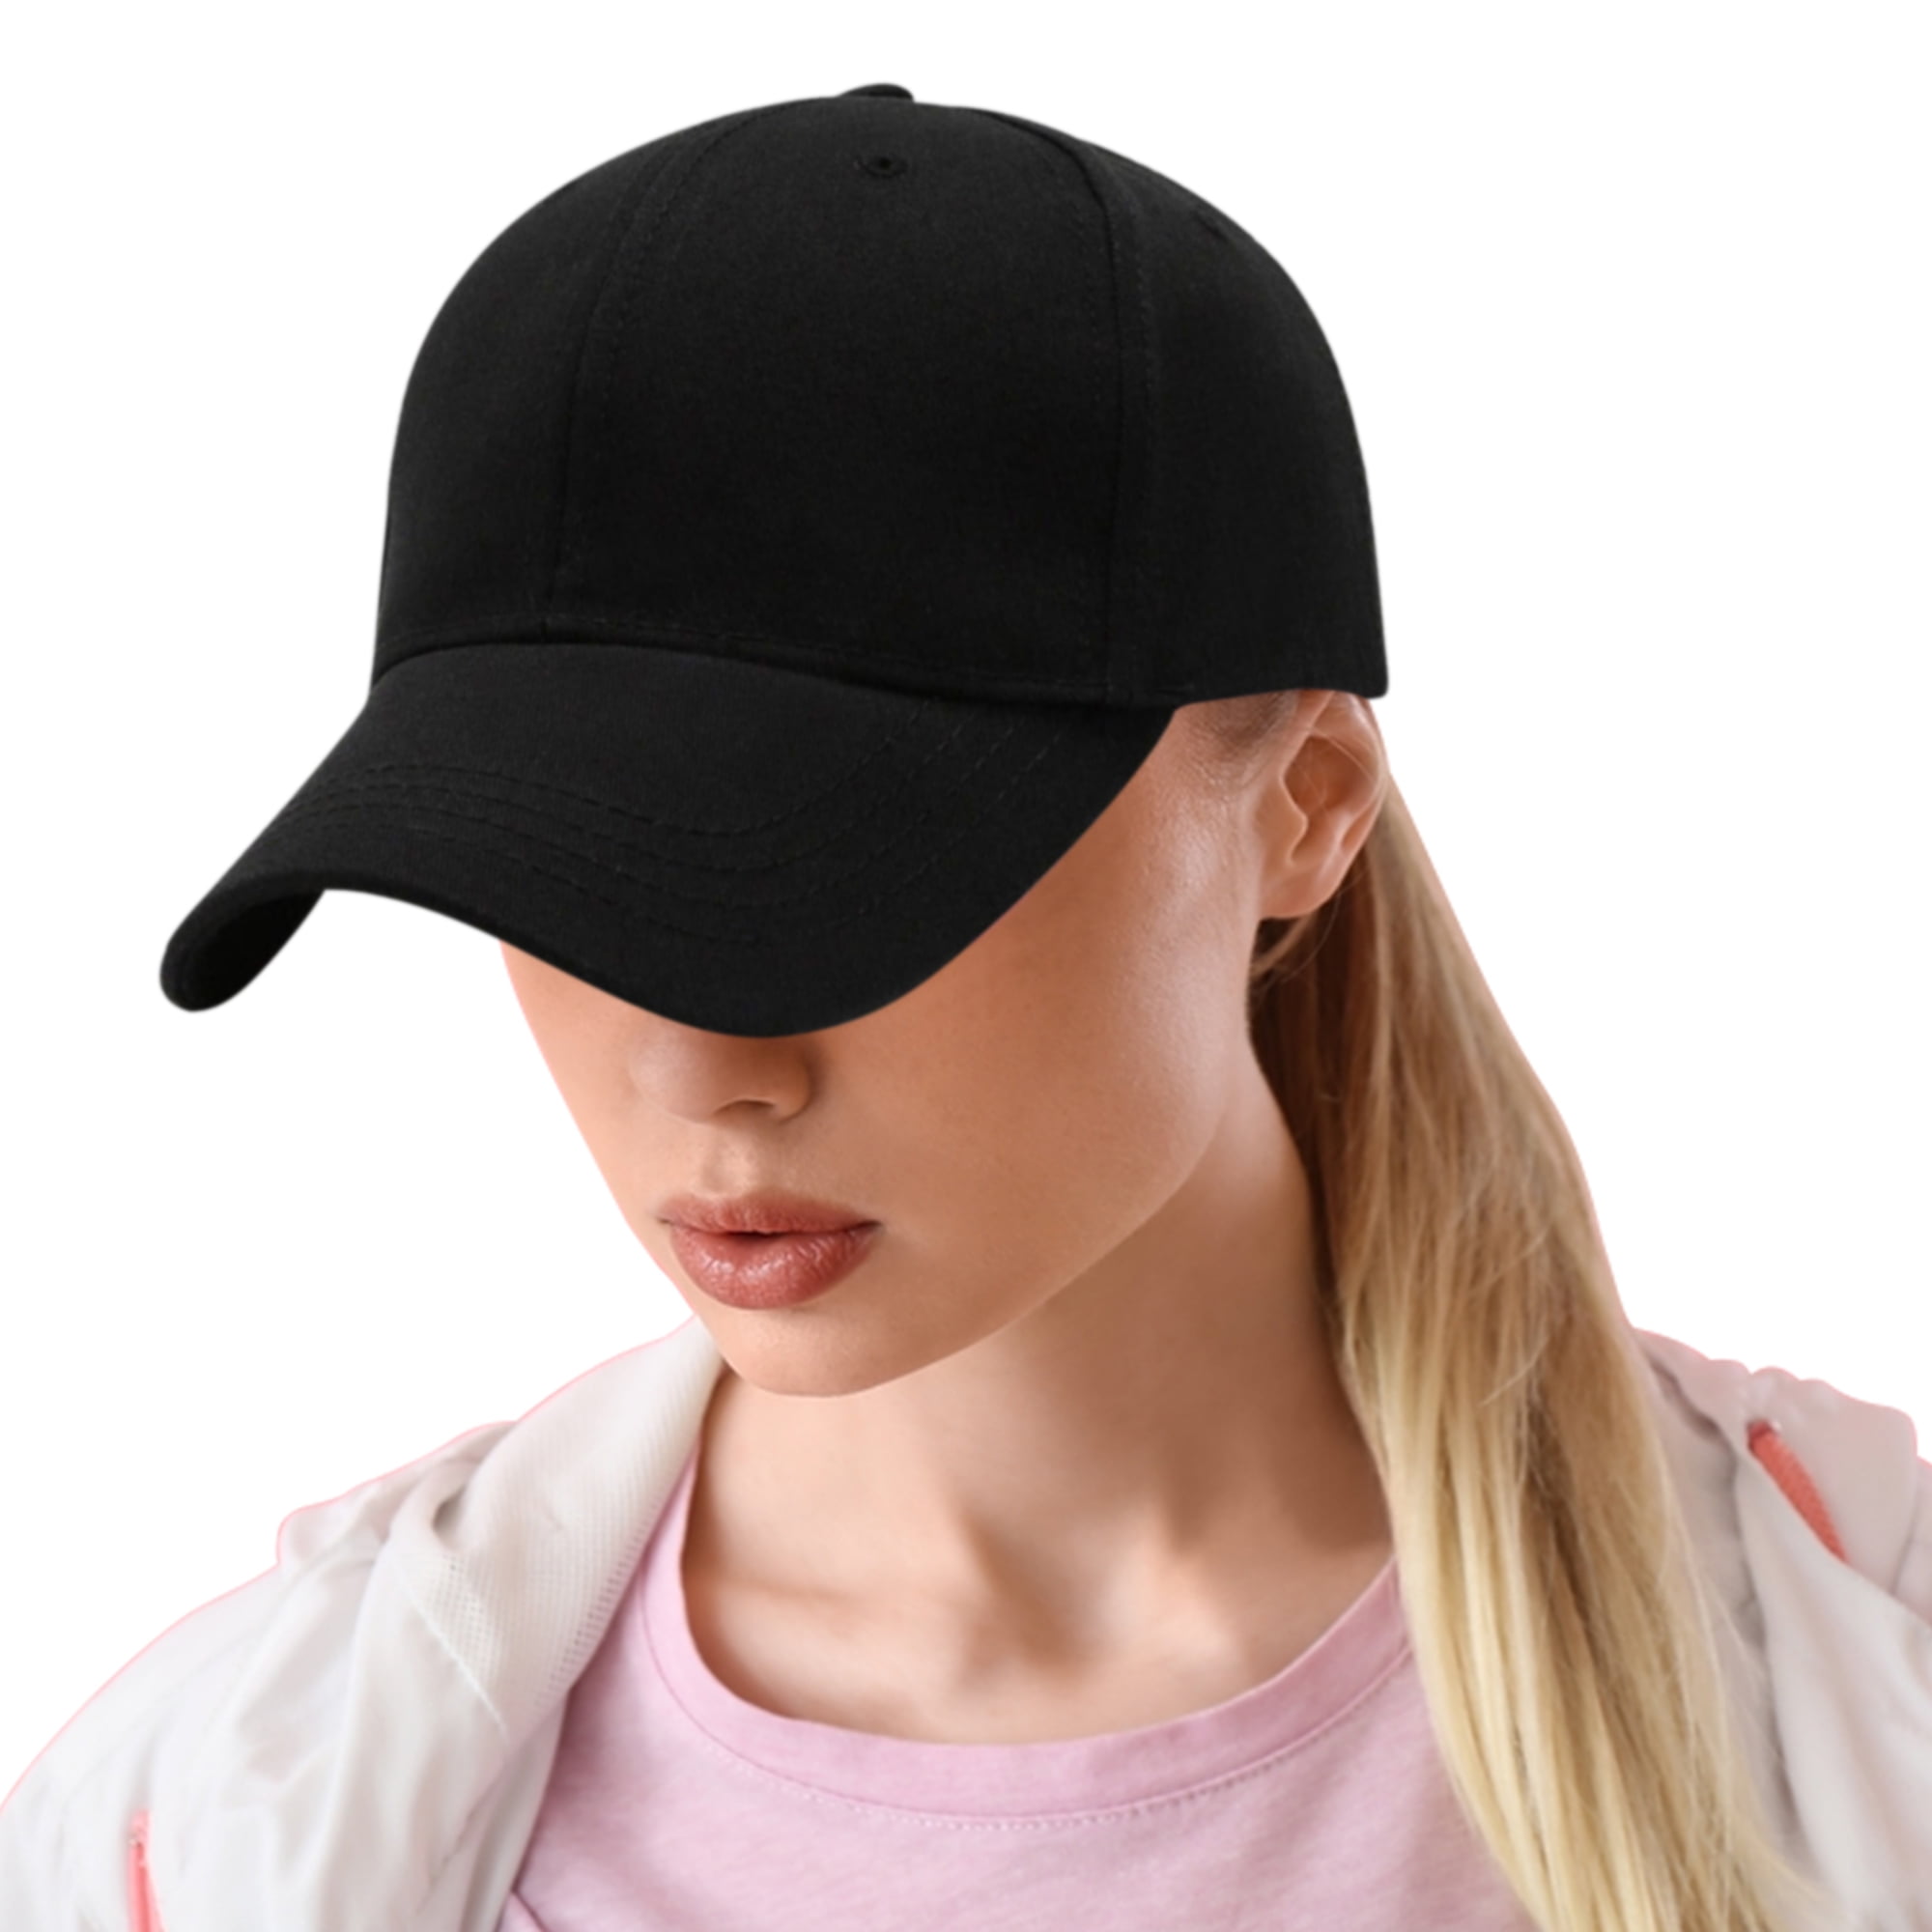 Sun Hats For Women Packable Sun Hat Wide UV Protection Beach Sun Cap